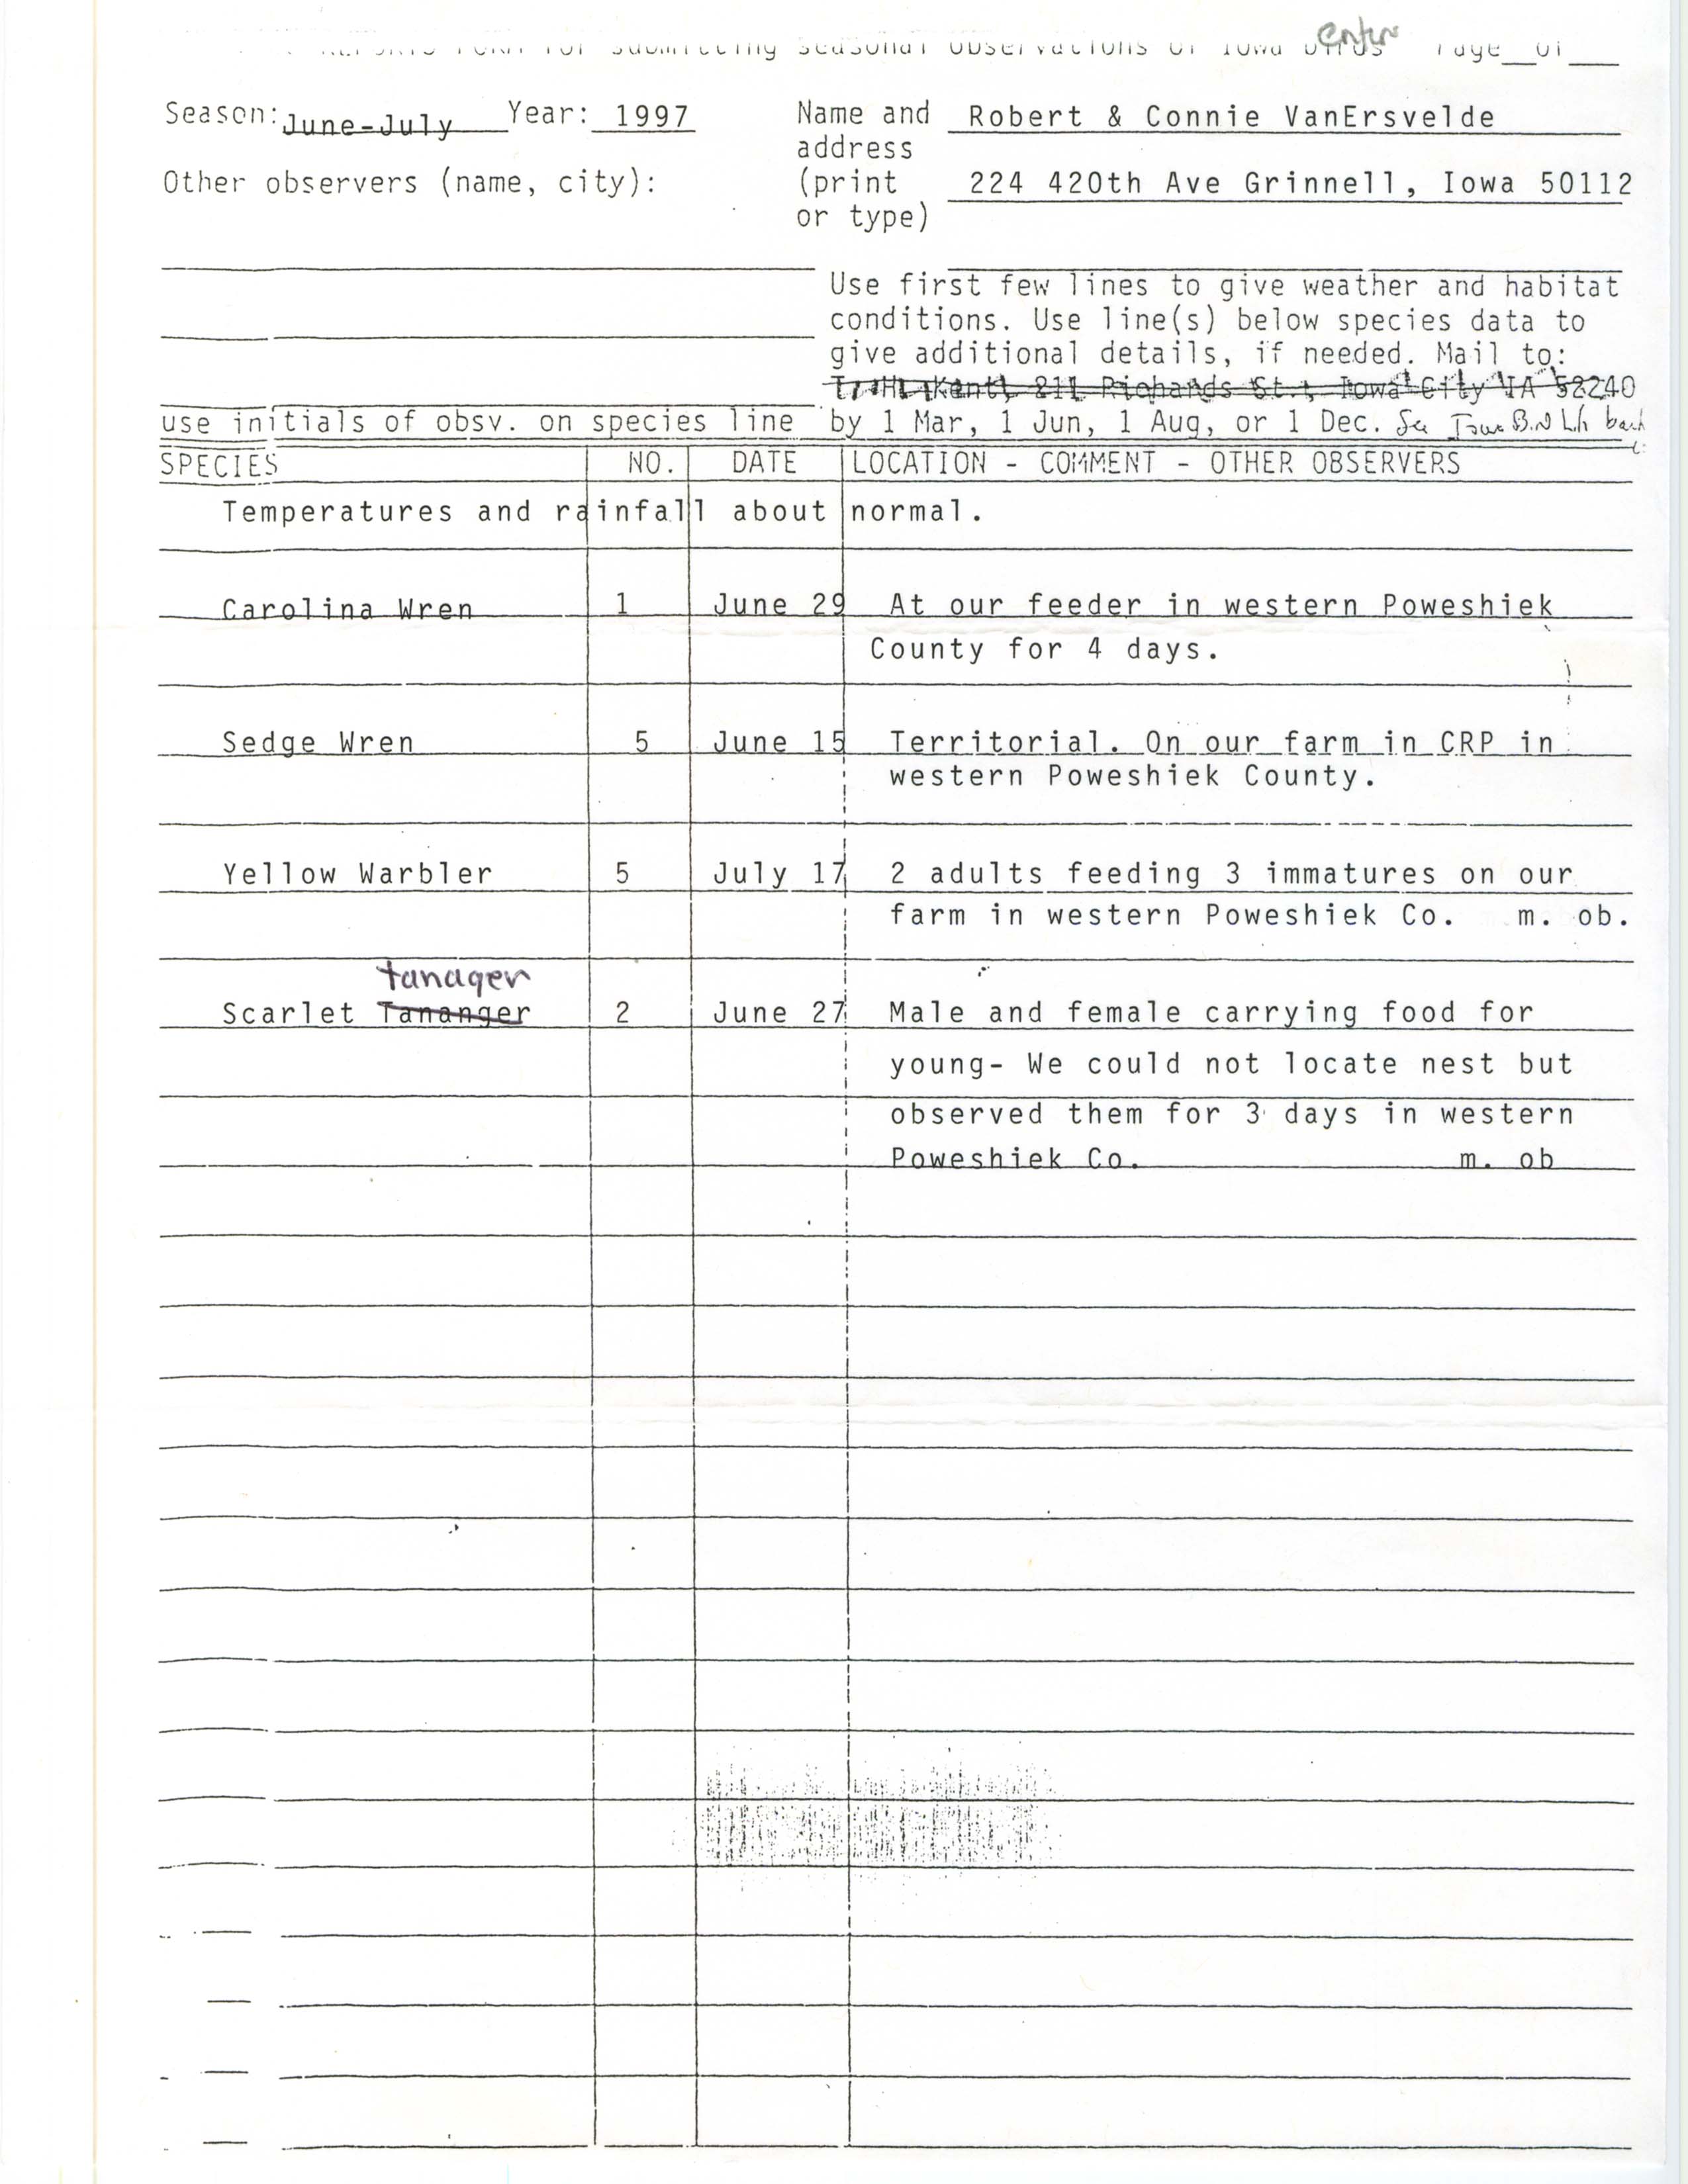 Field reports form for submitting seasonal observations of Iowa birds, Robert VanErsvelde and Connie VanErsvelde, summer 1997